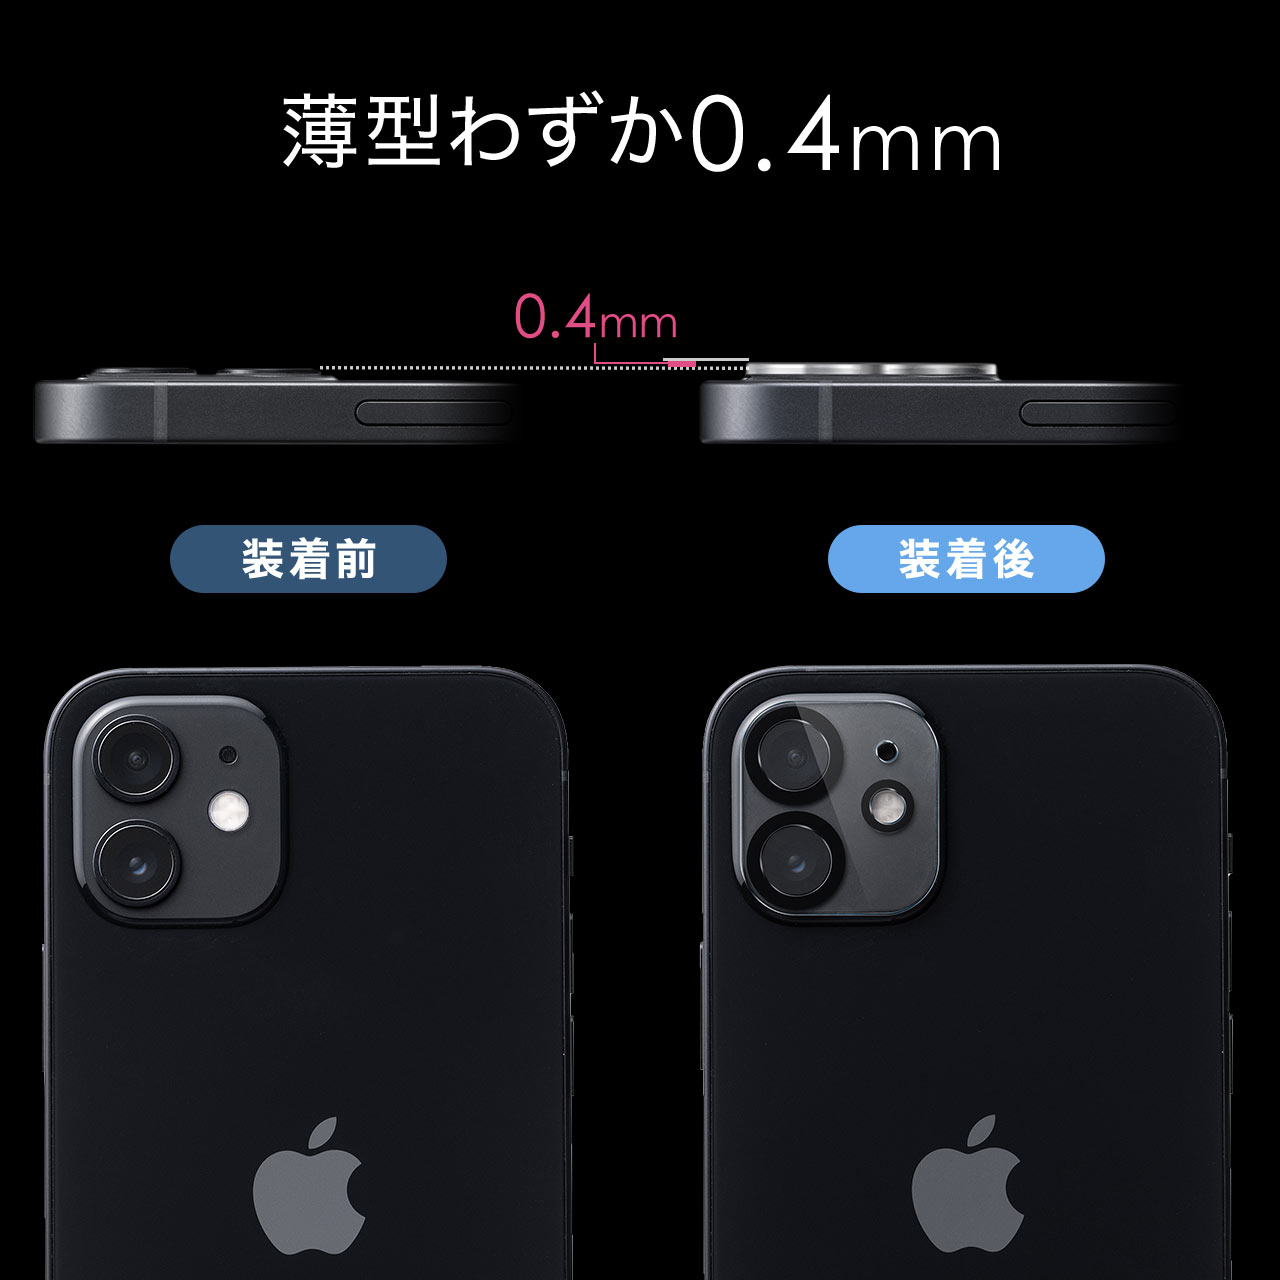 iPhone12pJYی십KXtB(dx9HE񖇓j 200-LCD065